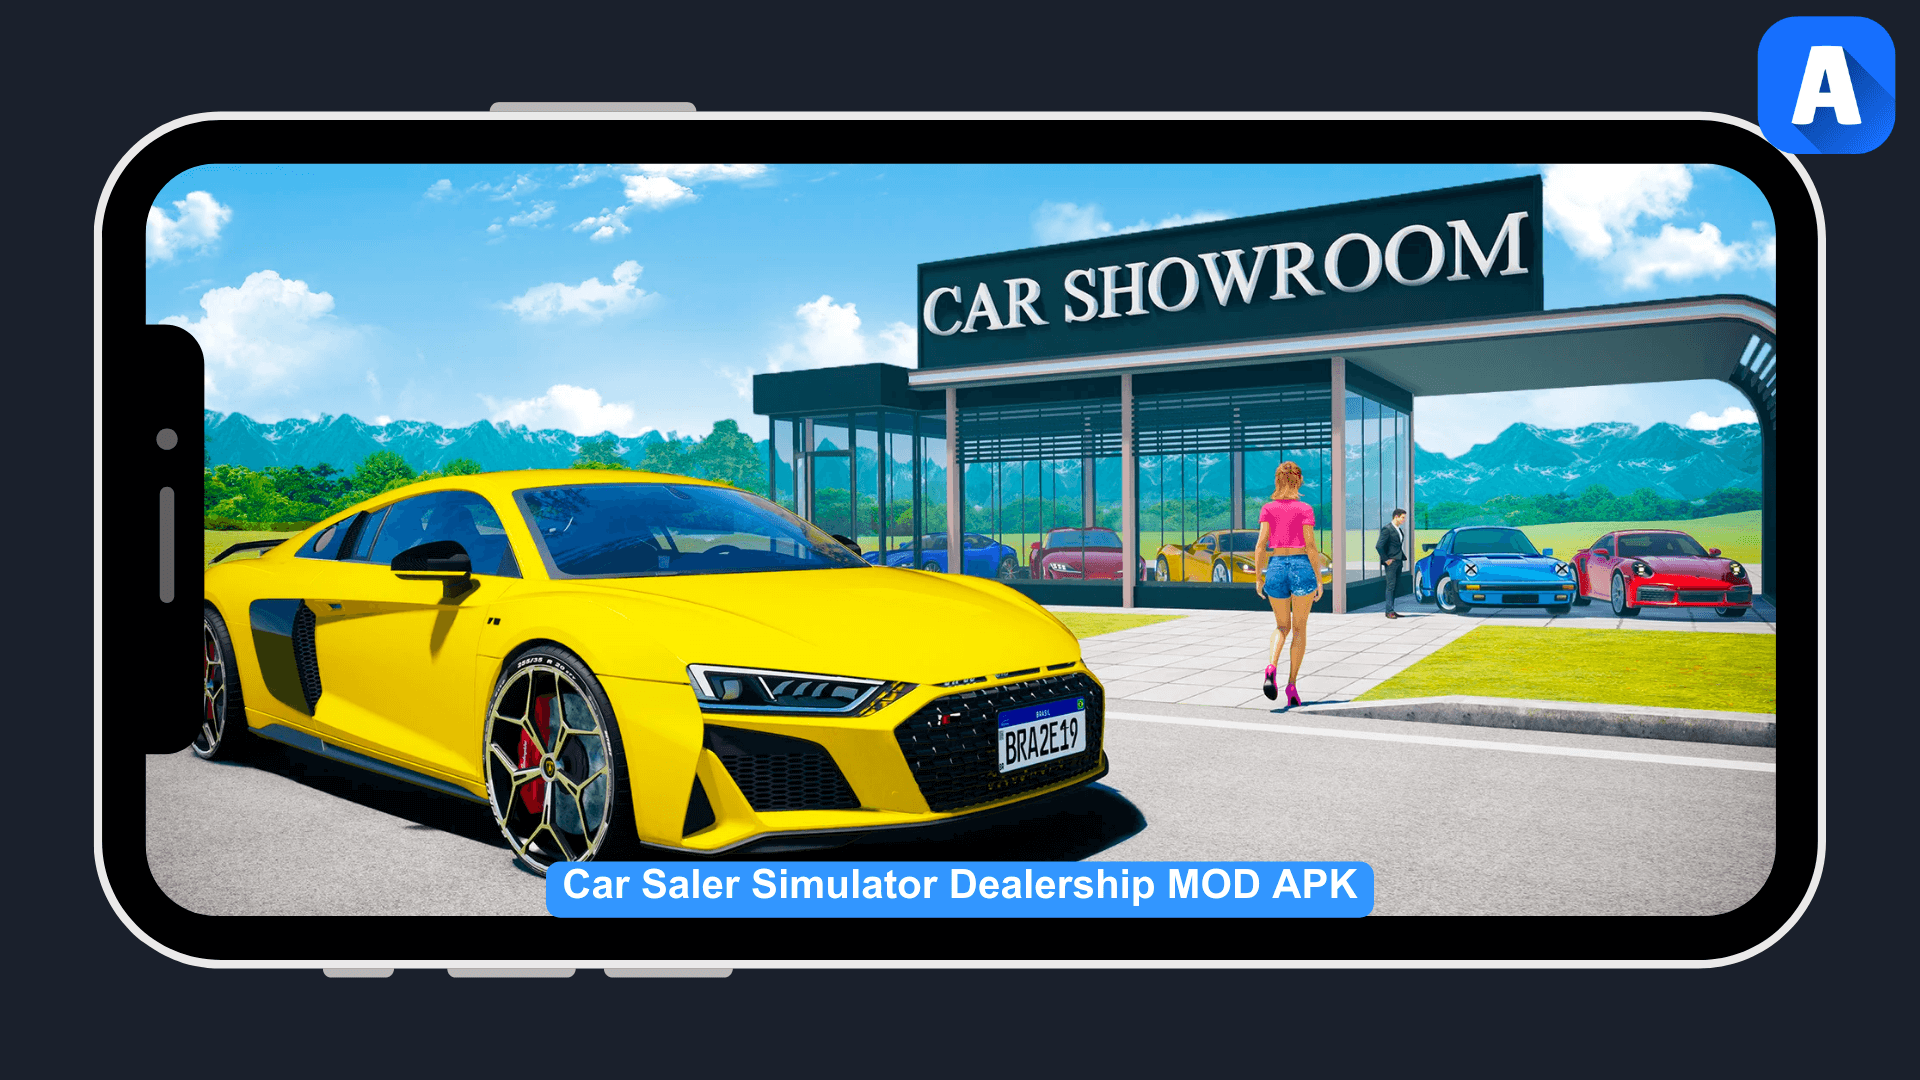 Car Saler Simulator Dealership Mod Apk Screenshot 1